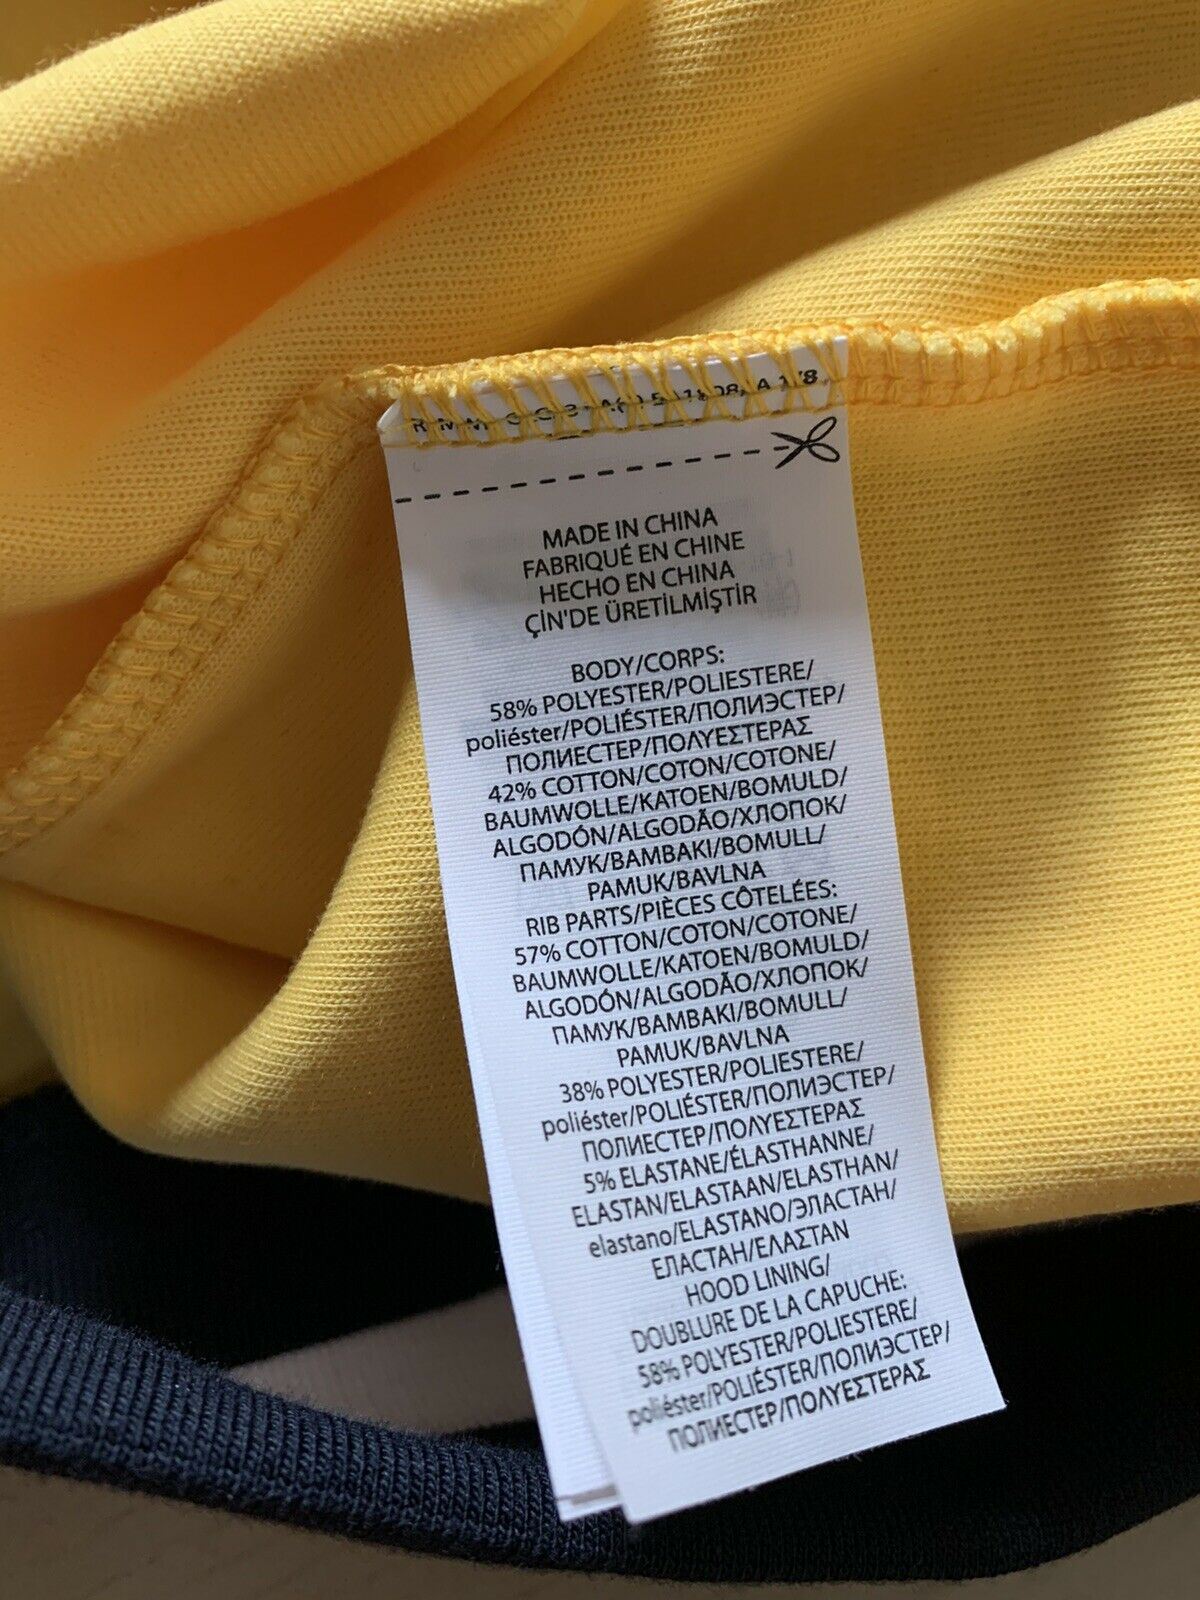 NWT Polo Ralph Lauren Men Sweater Jacket Yellow M